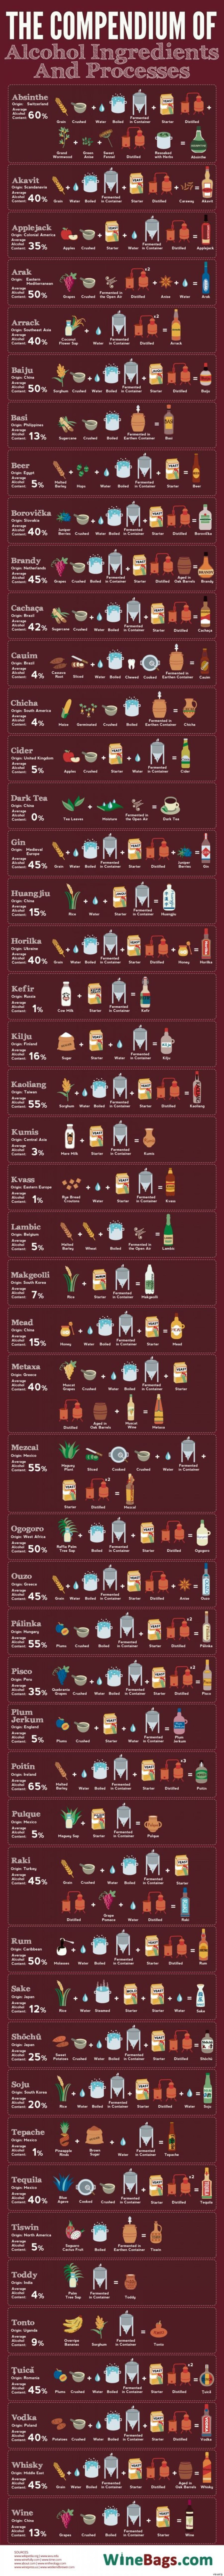 Alcohol Ingredients